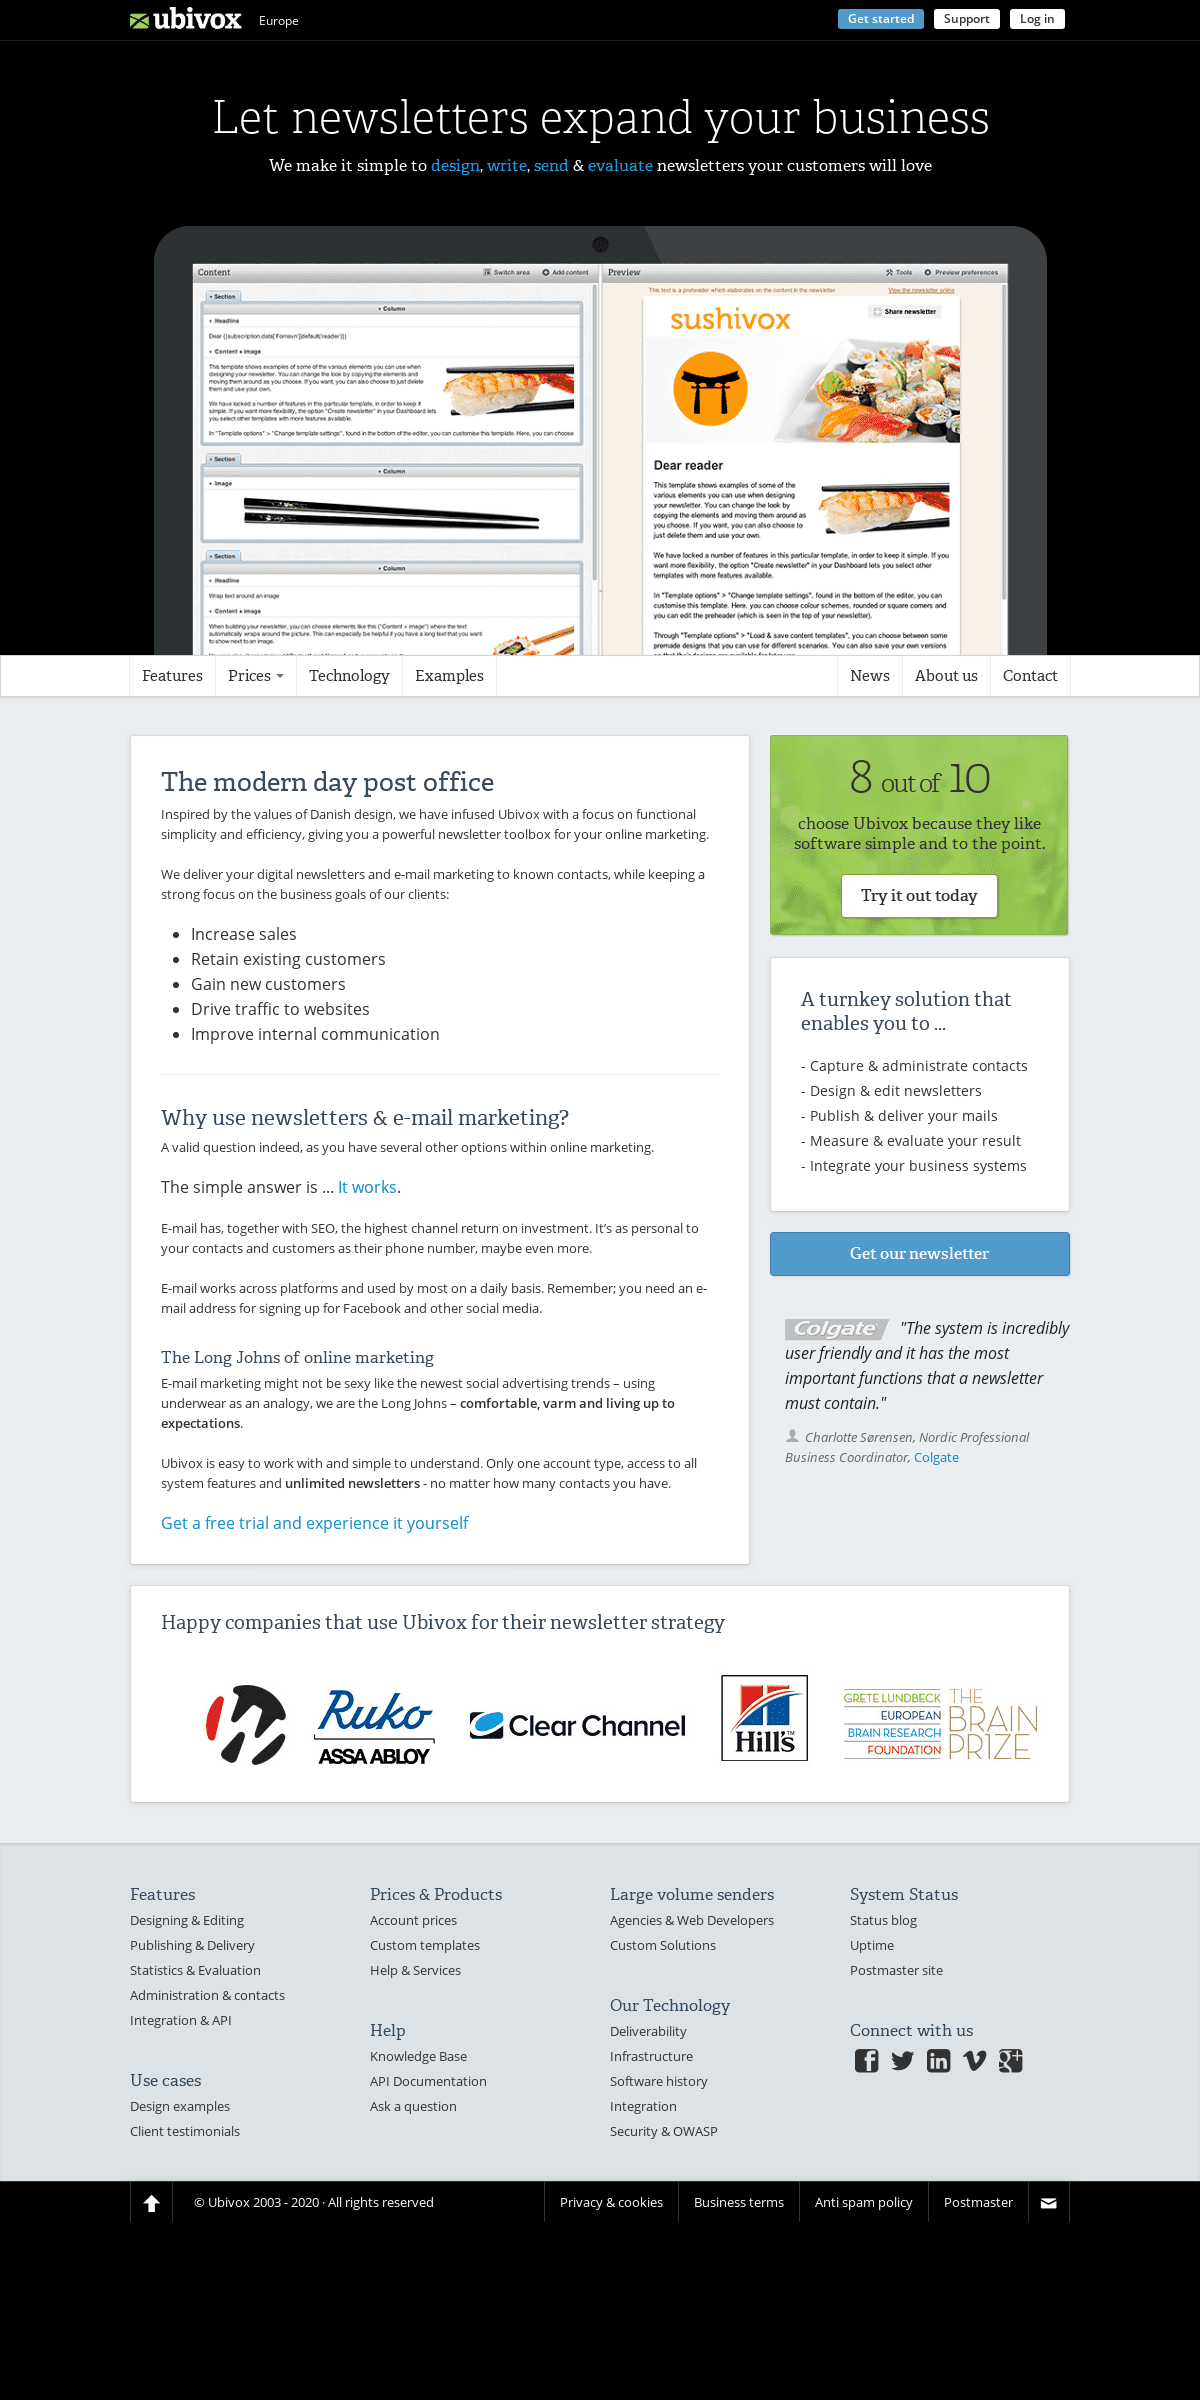 A complete backup of ubivox.com